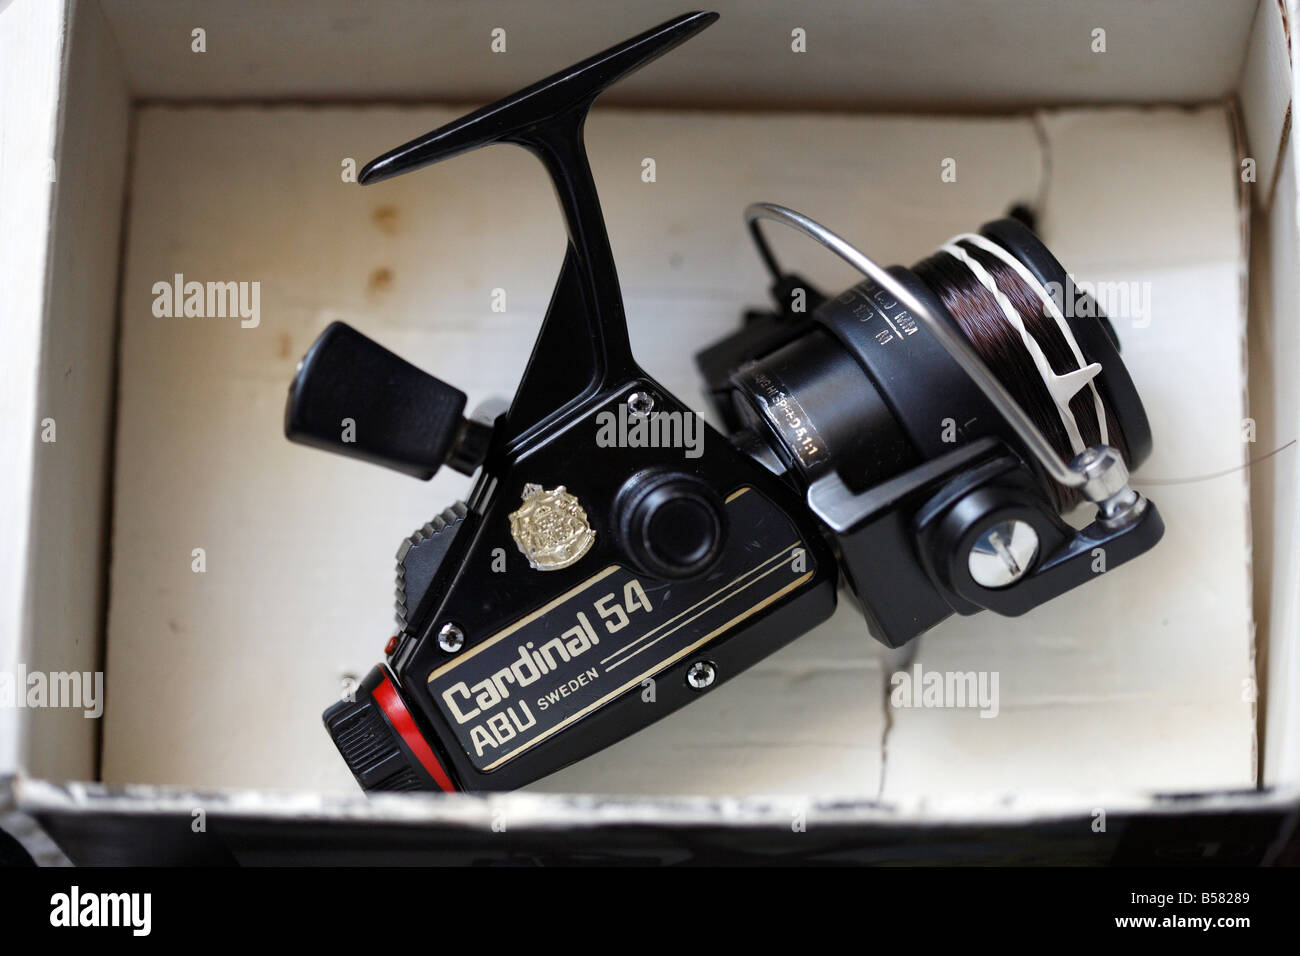 The ABU Cardinal, fixed spool fishing reel Stock Photo - Alamy